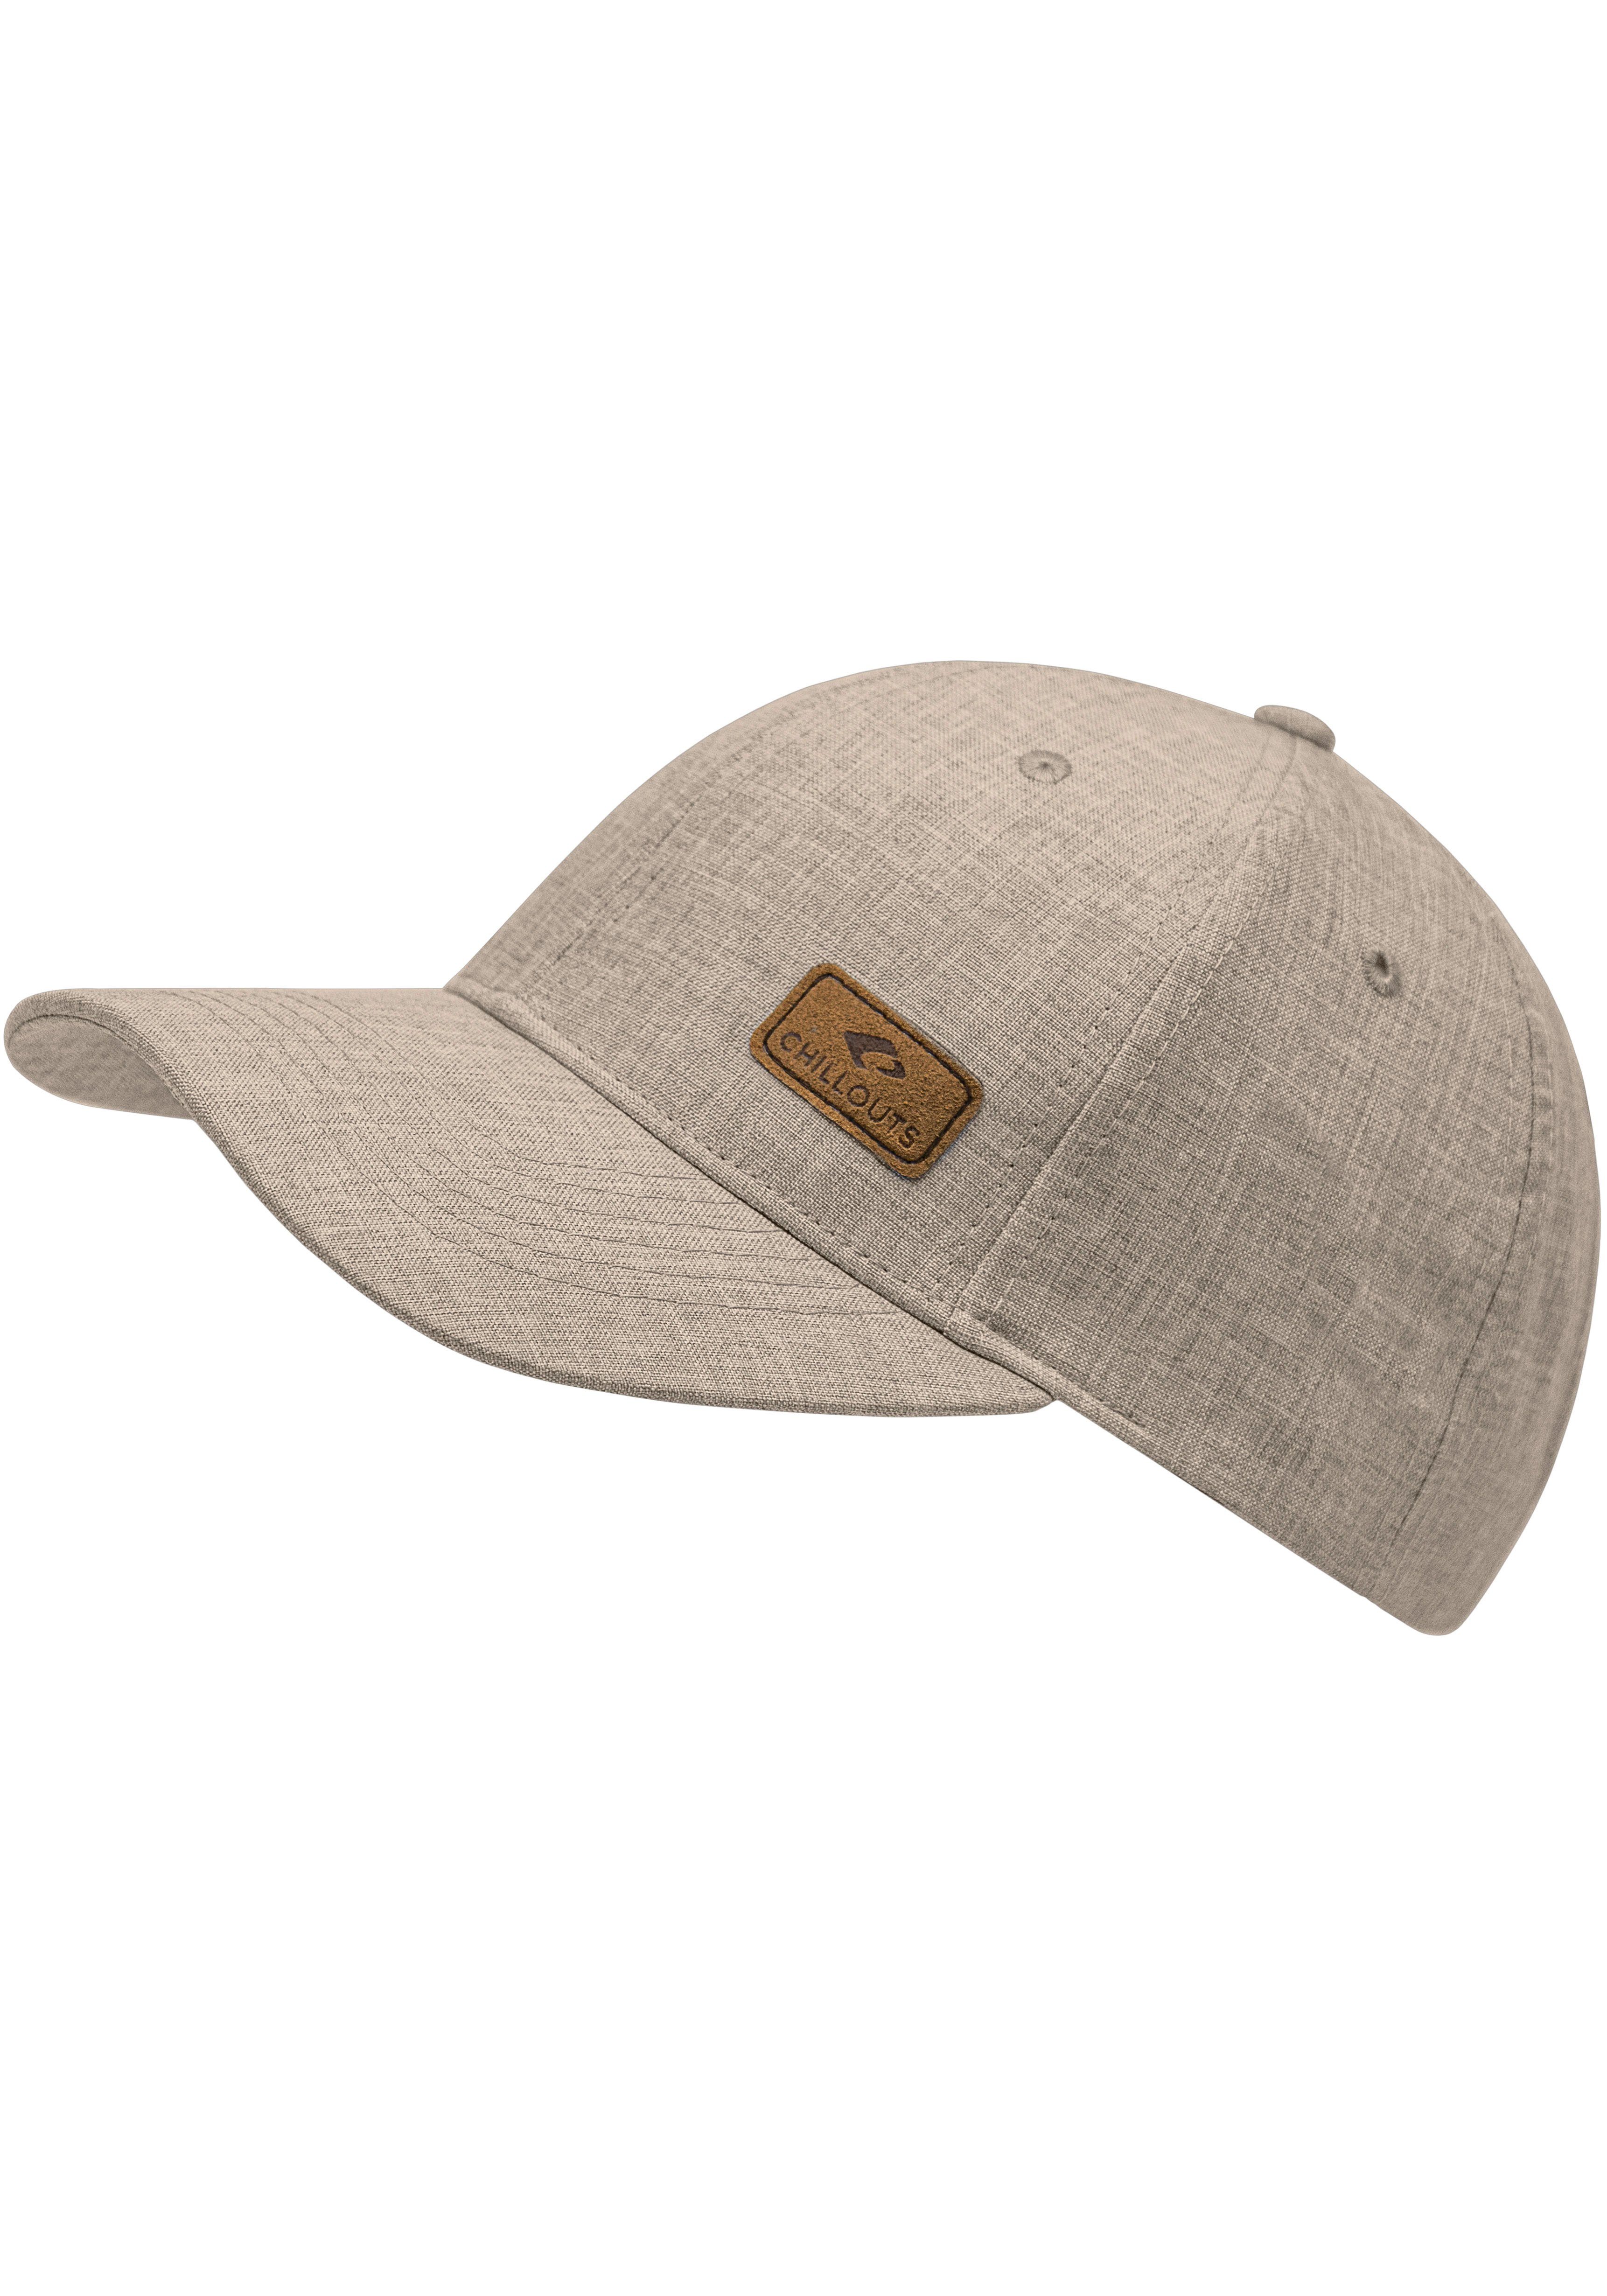 chillouts Baseball Cap Amadora verstellbar beige melierter Hat in Optik, One Size